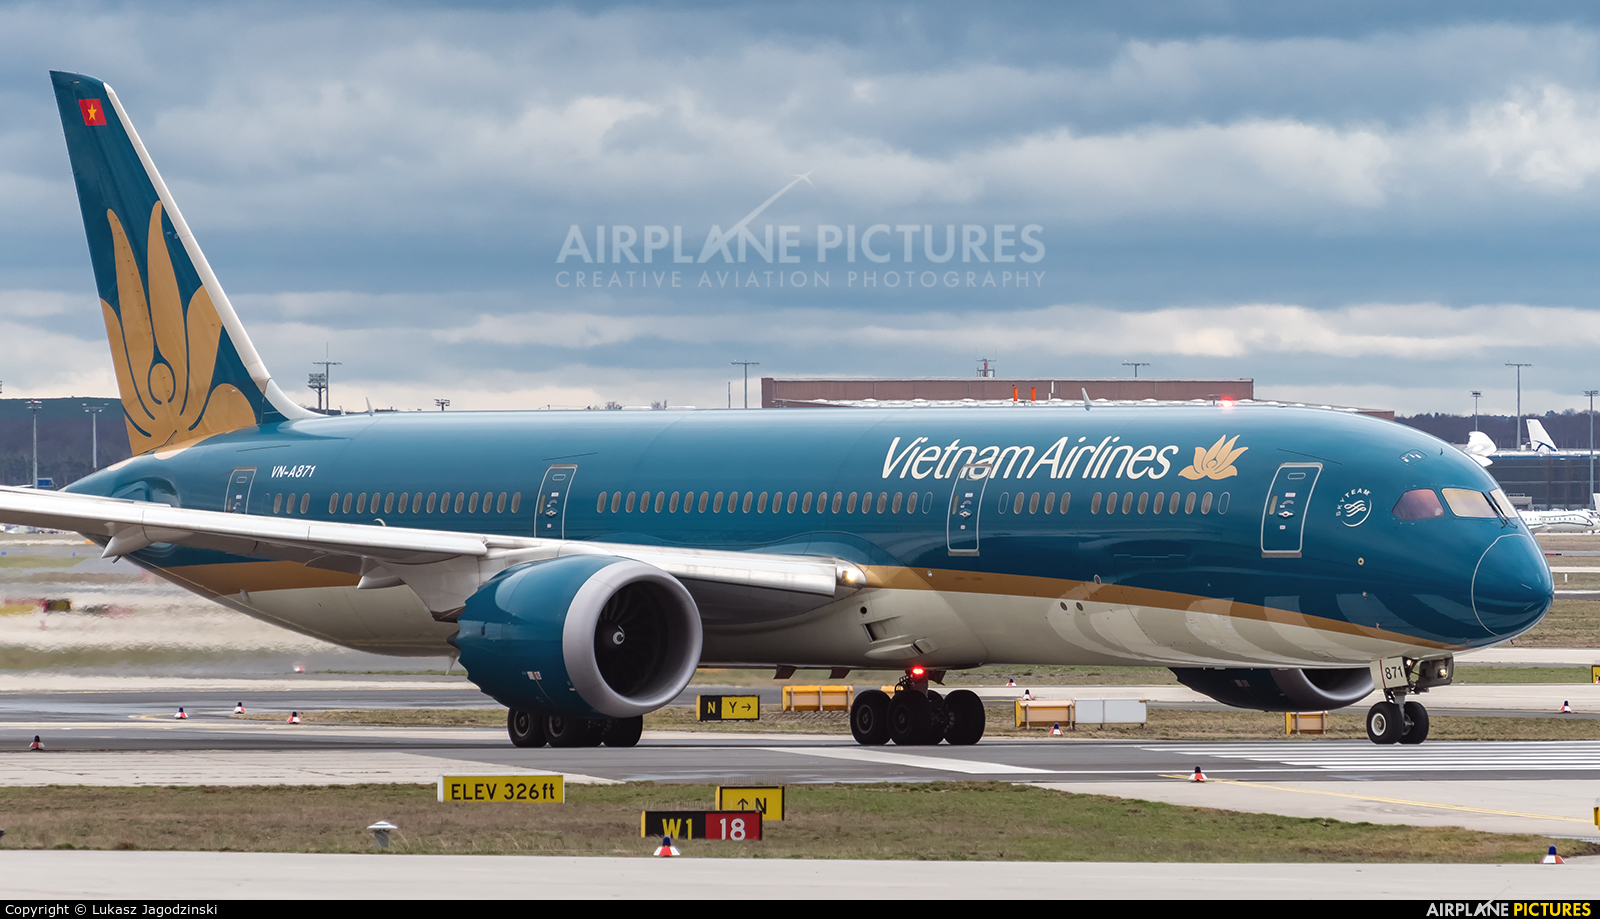 Vietnam Airlines VN-A871 aircraft at Frankfurt